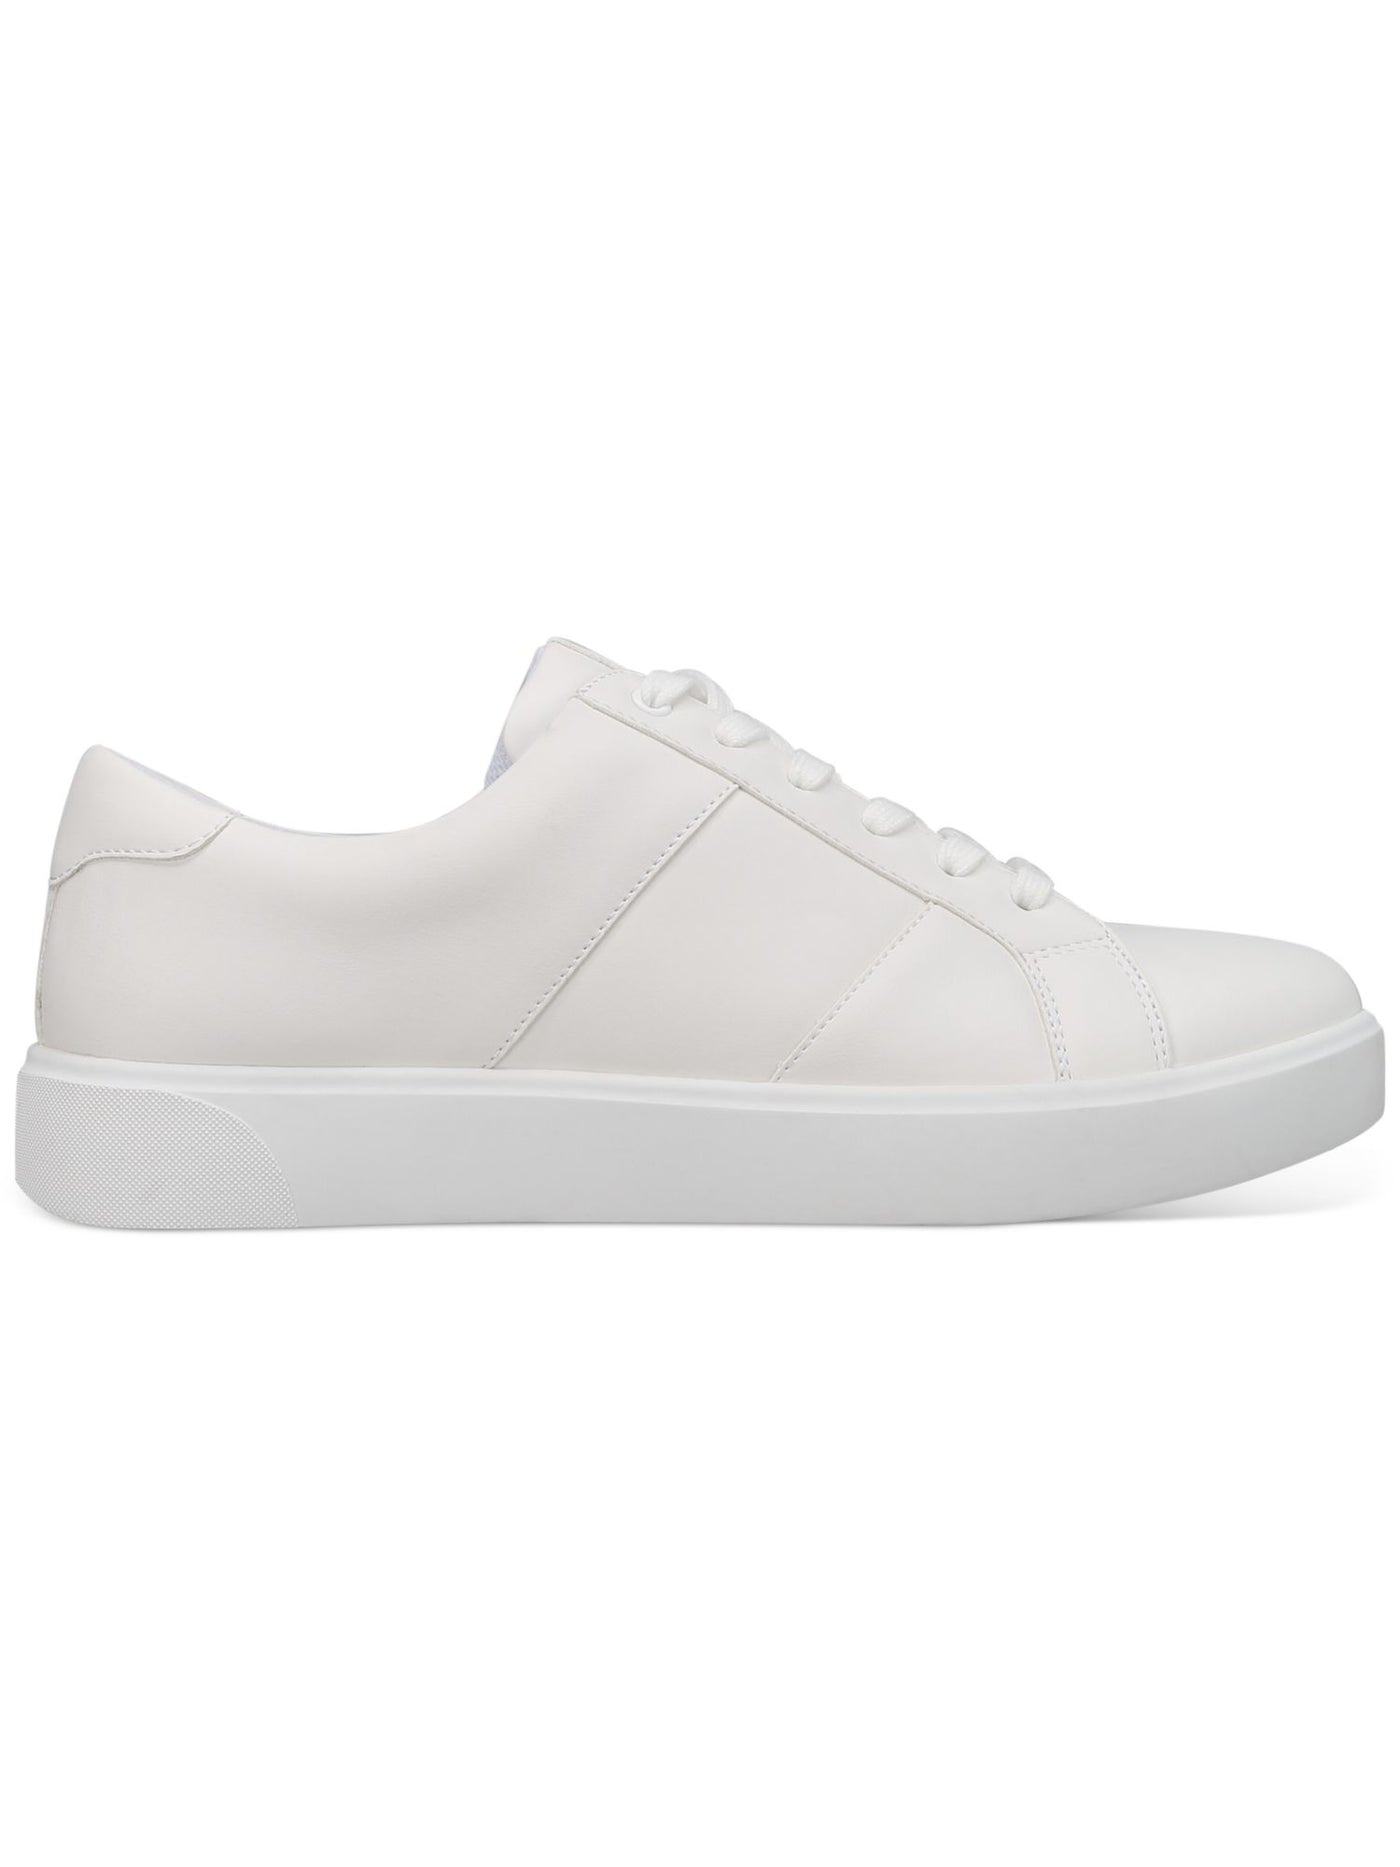 INC Mens White Comfort Ezra Round Toe Platform Lace-Up Athletic Sneakers Shoes 12 M